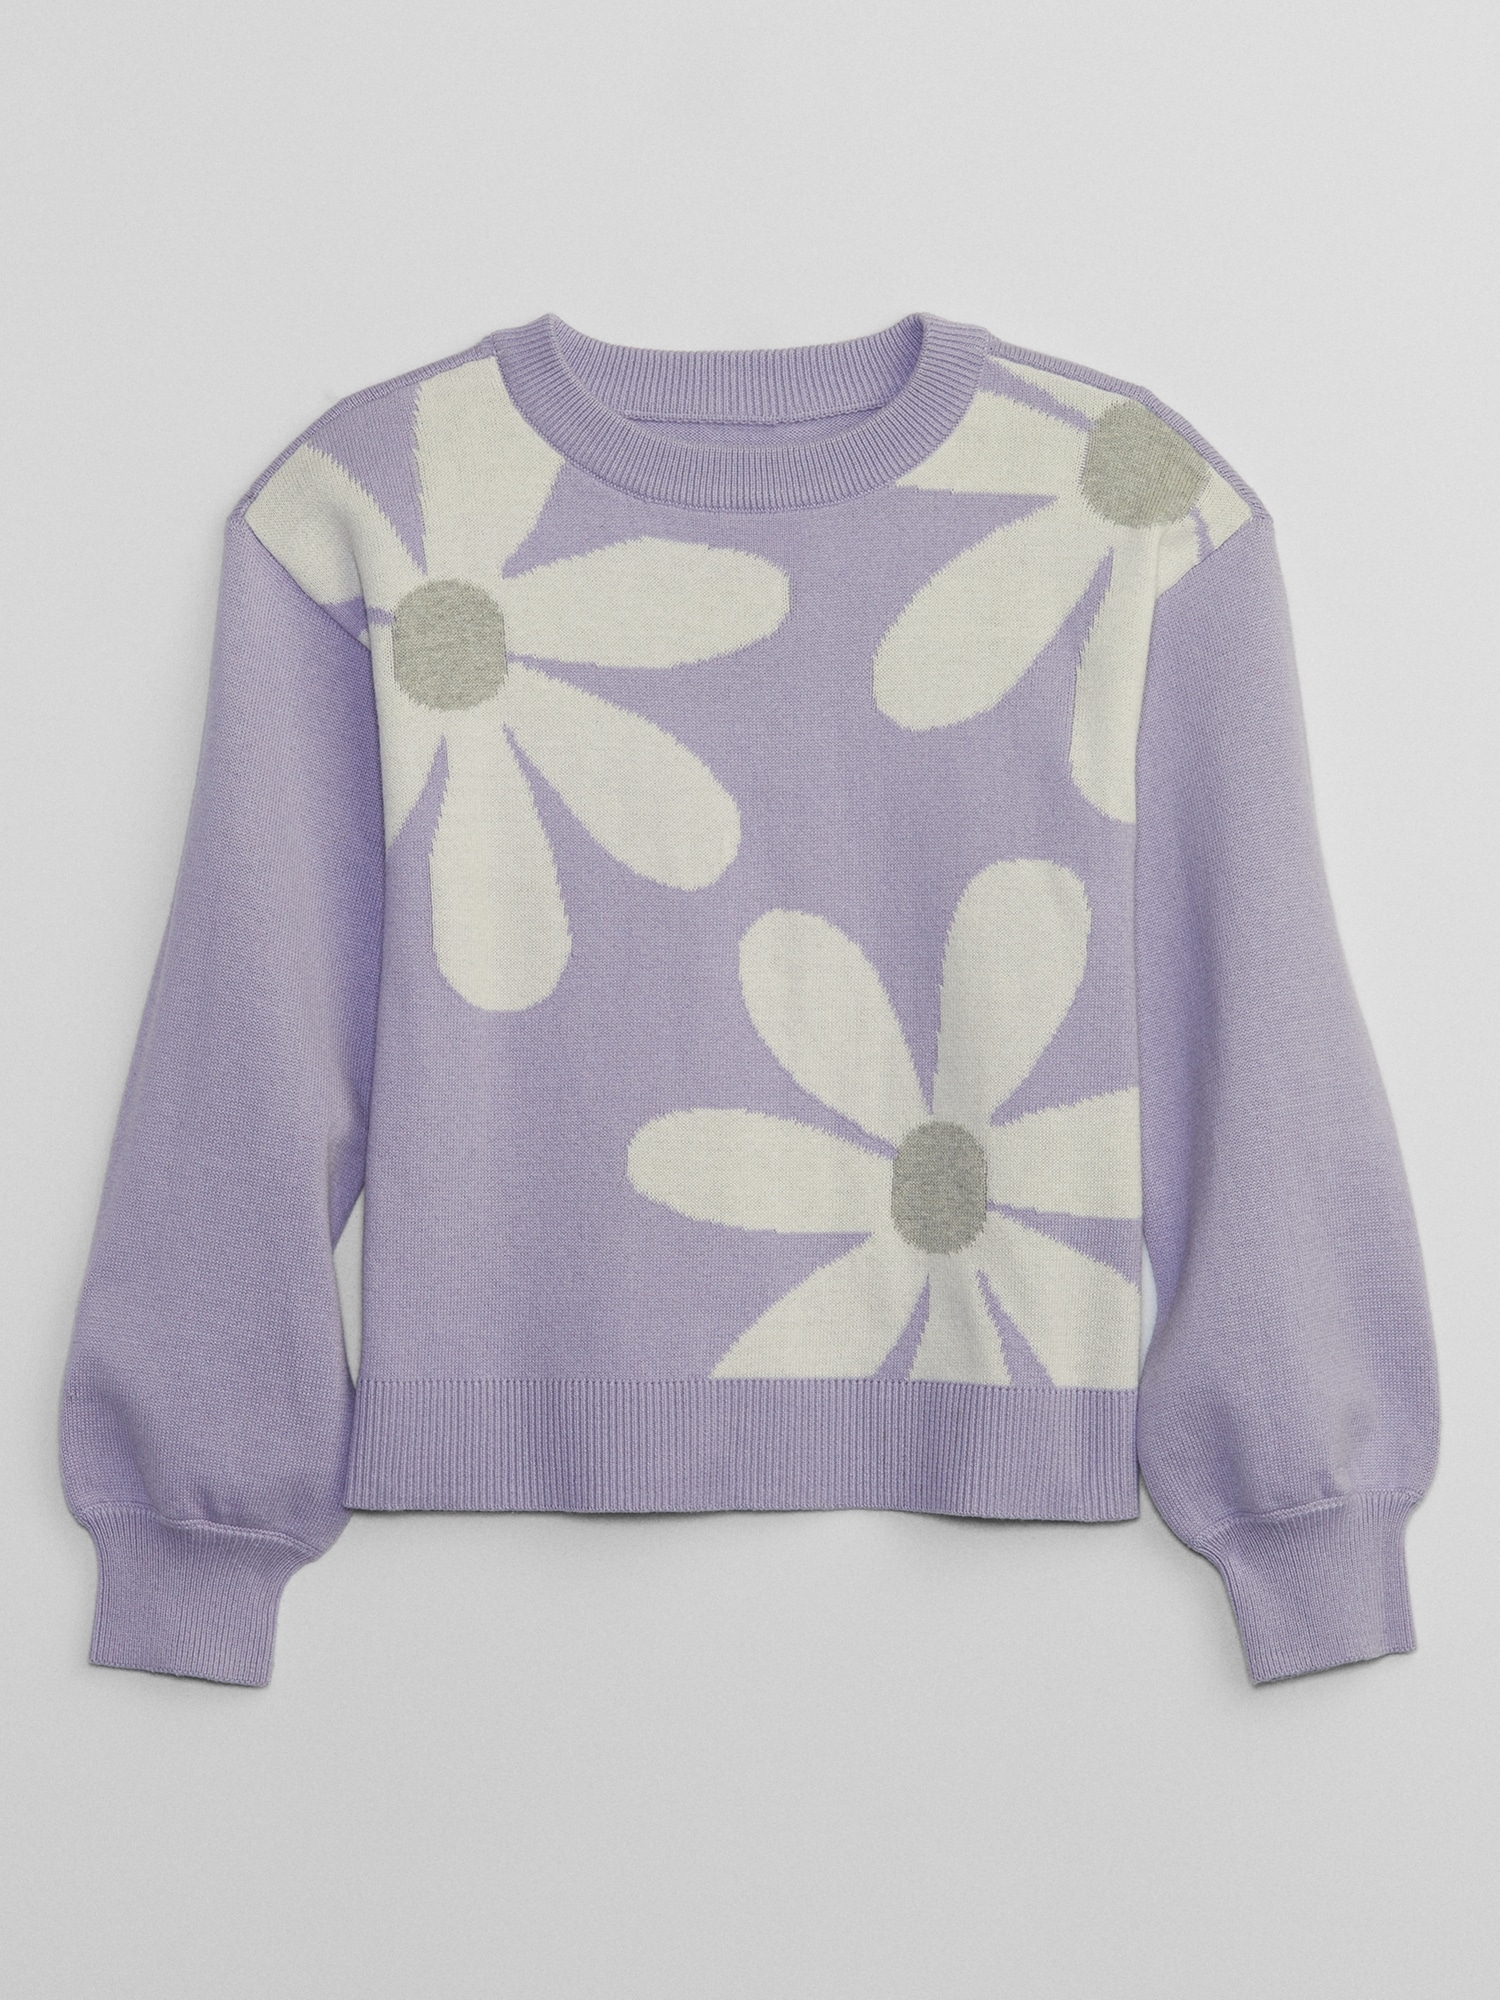 Print Sweater | Itarsia Gap Kids Factory